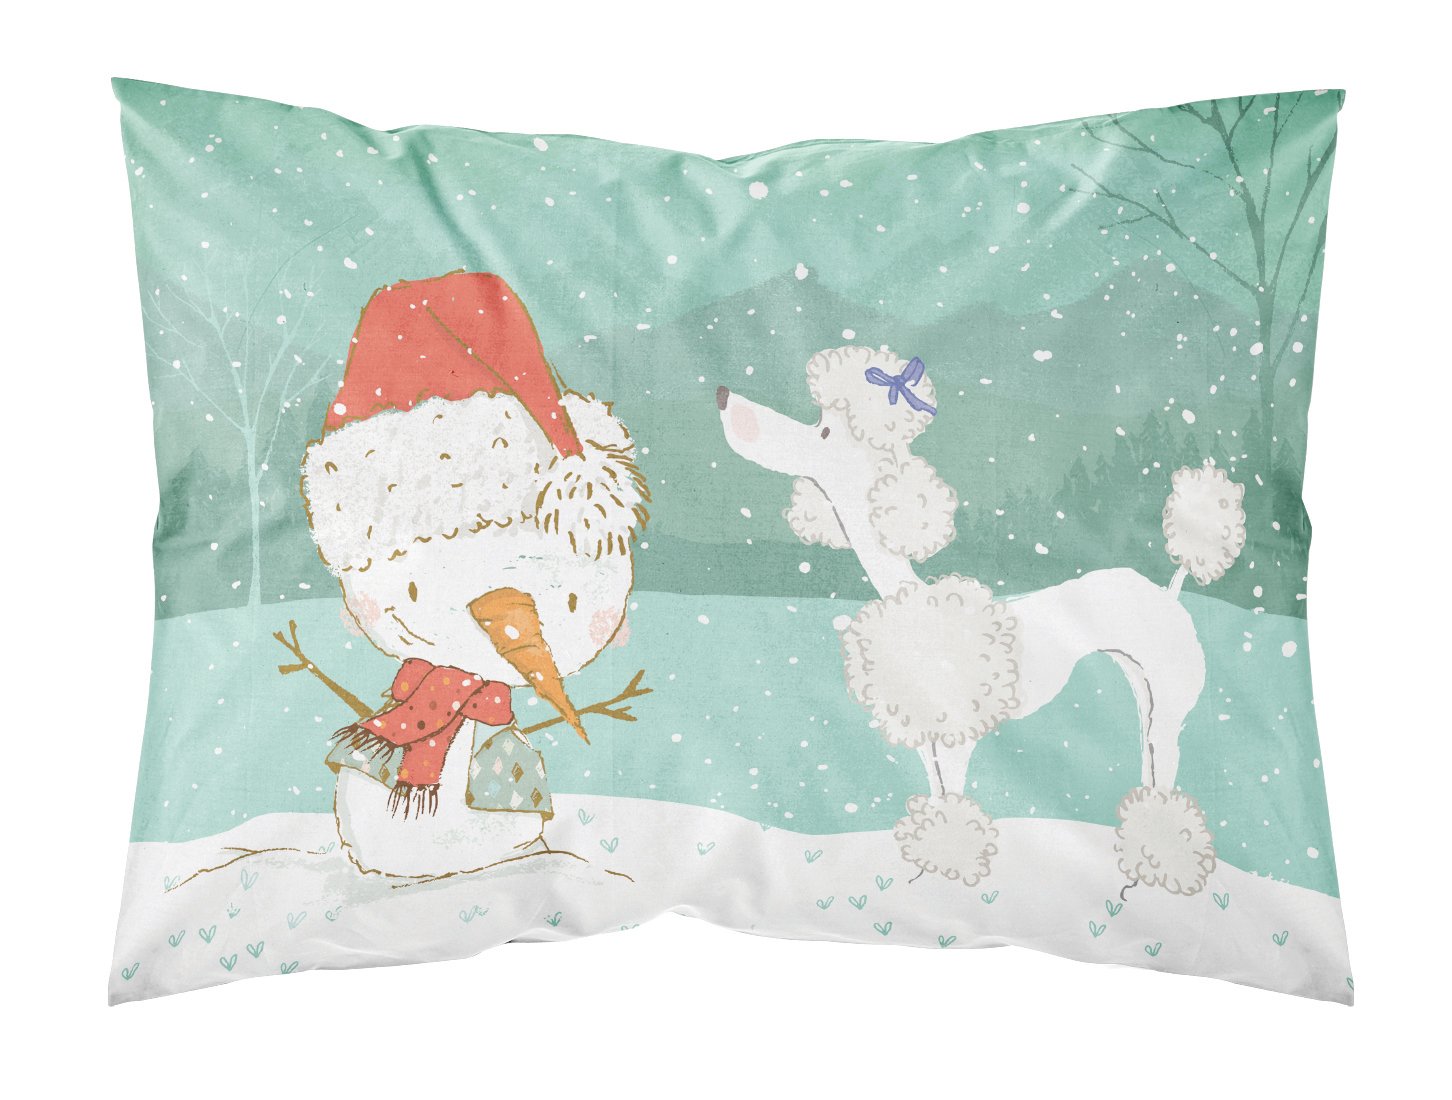 White Poodle Snowman Christmas Fabric Standard Pillowcase CK2067PILLOWCASE by Caroline's Treasures